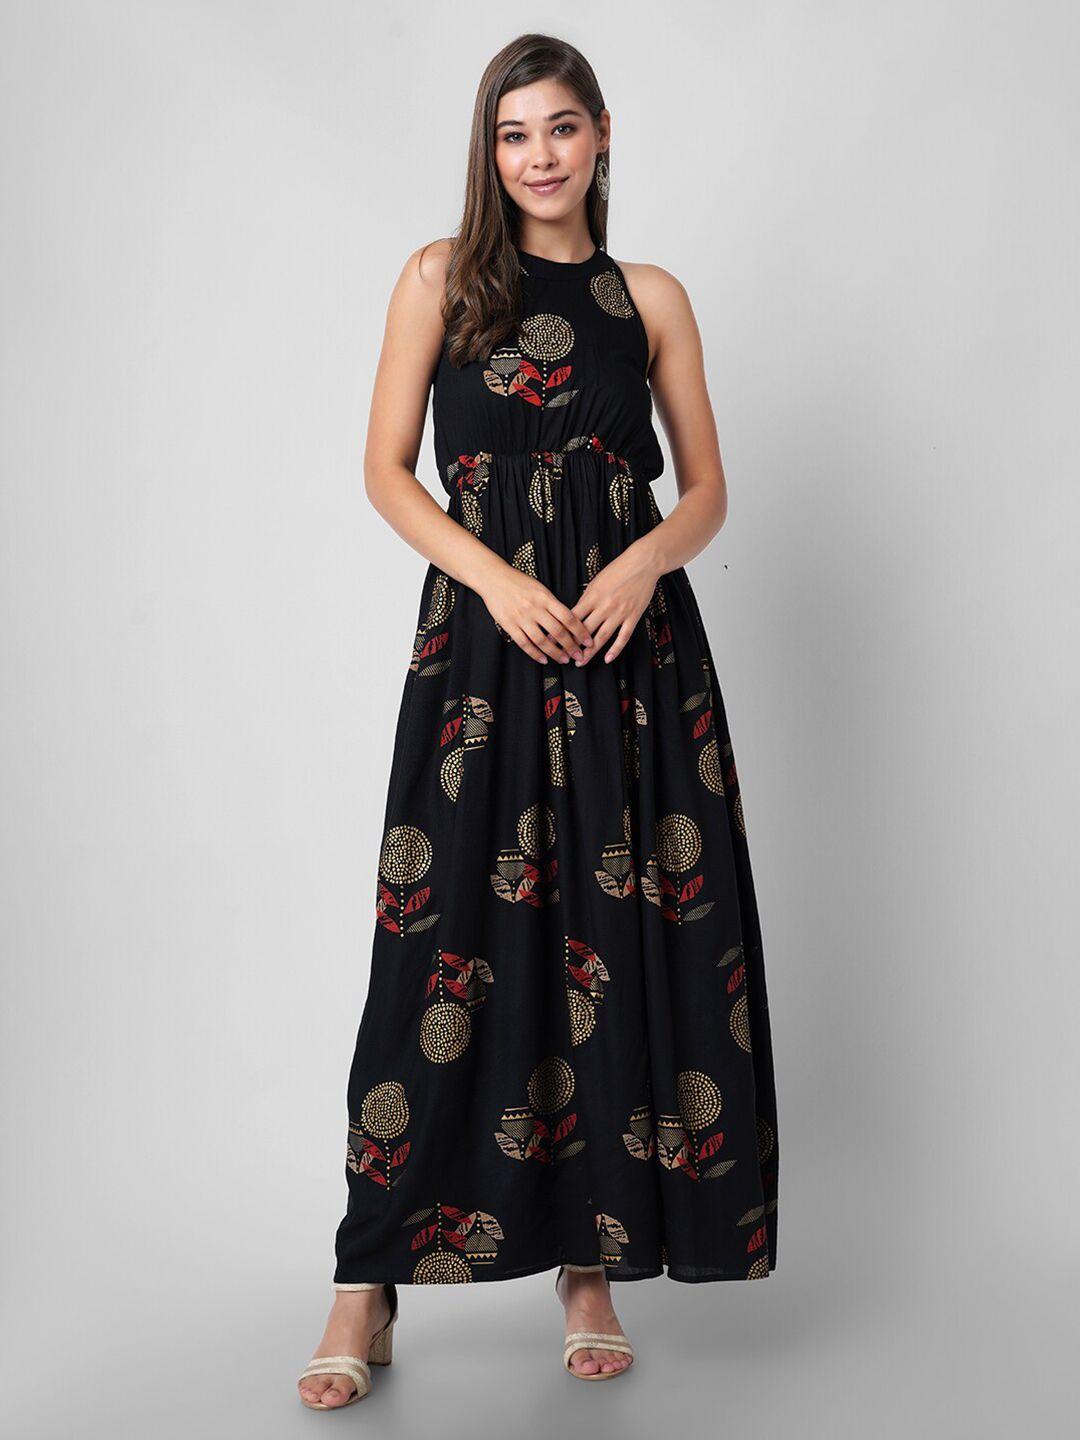 daevish black floral maxi dress